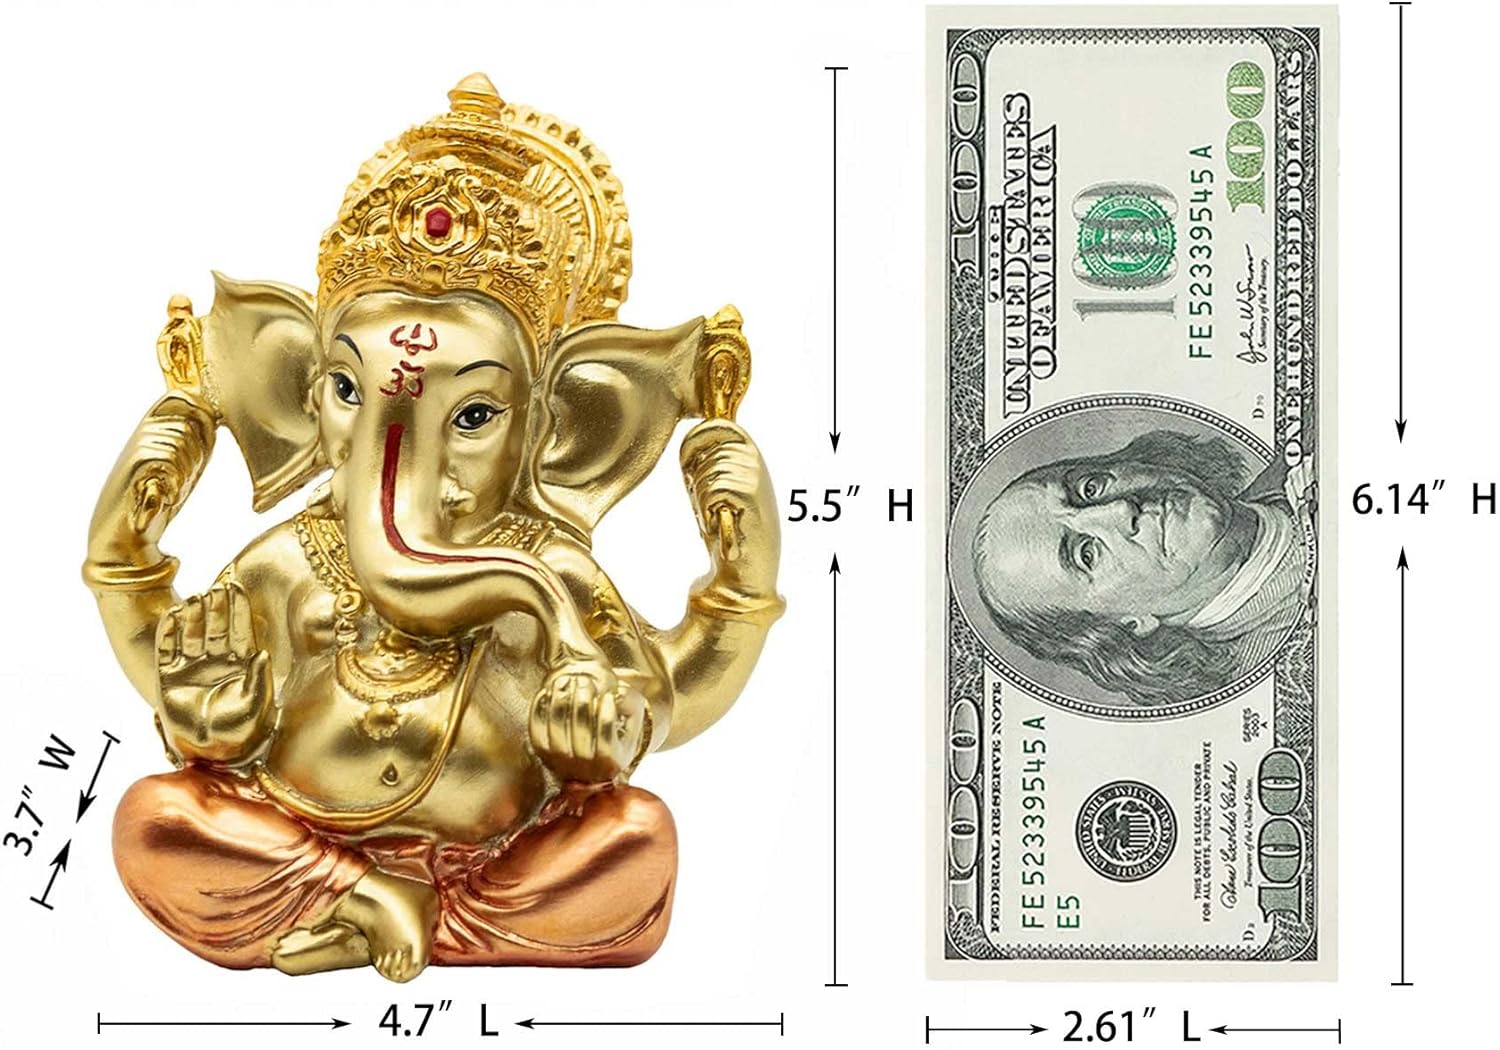 Hindu Lord Ganesha Sculpture - Indian Religious Elephant Buddha Ganesh Statue Decoration - India Home Pooja Murti Temple Accessories Handmade Wedding Return Gifts